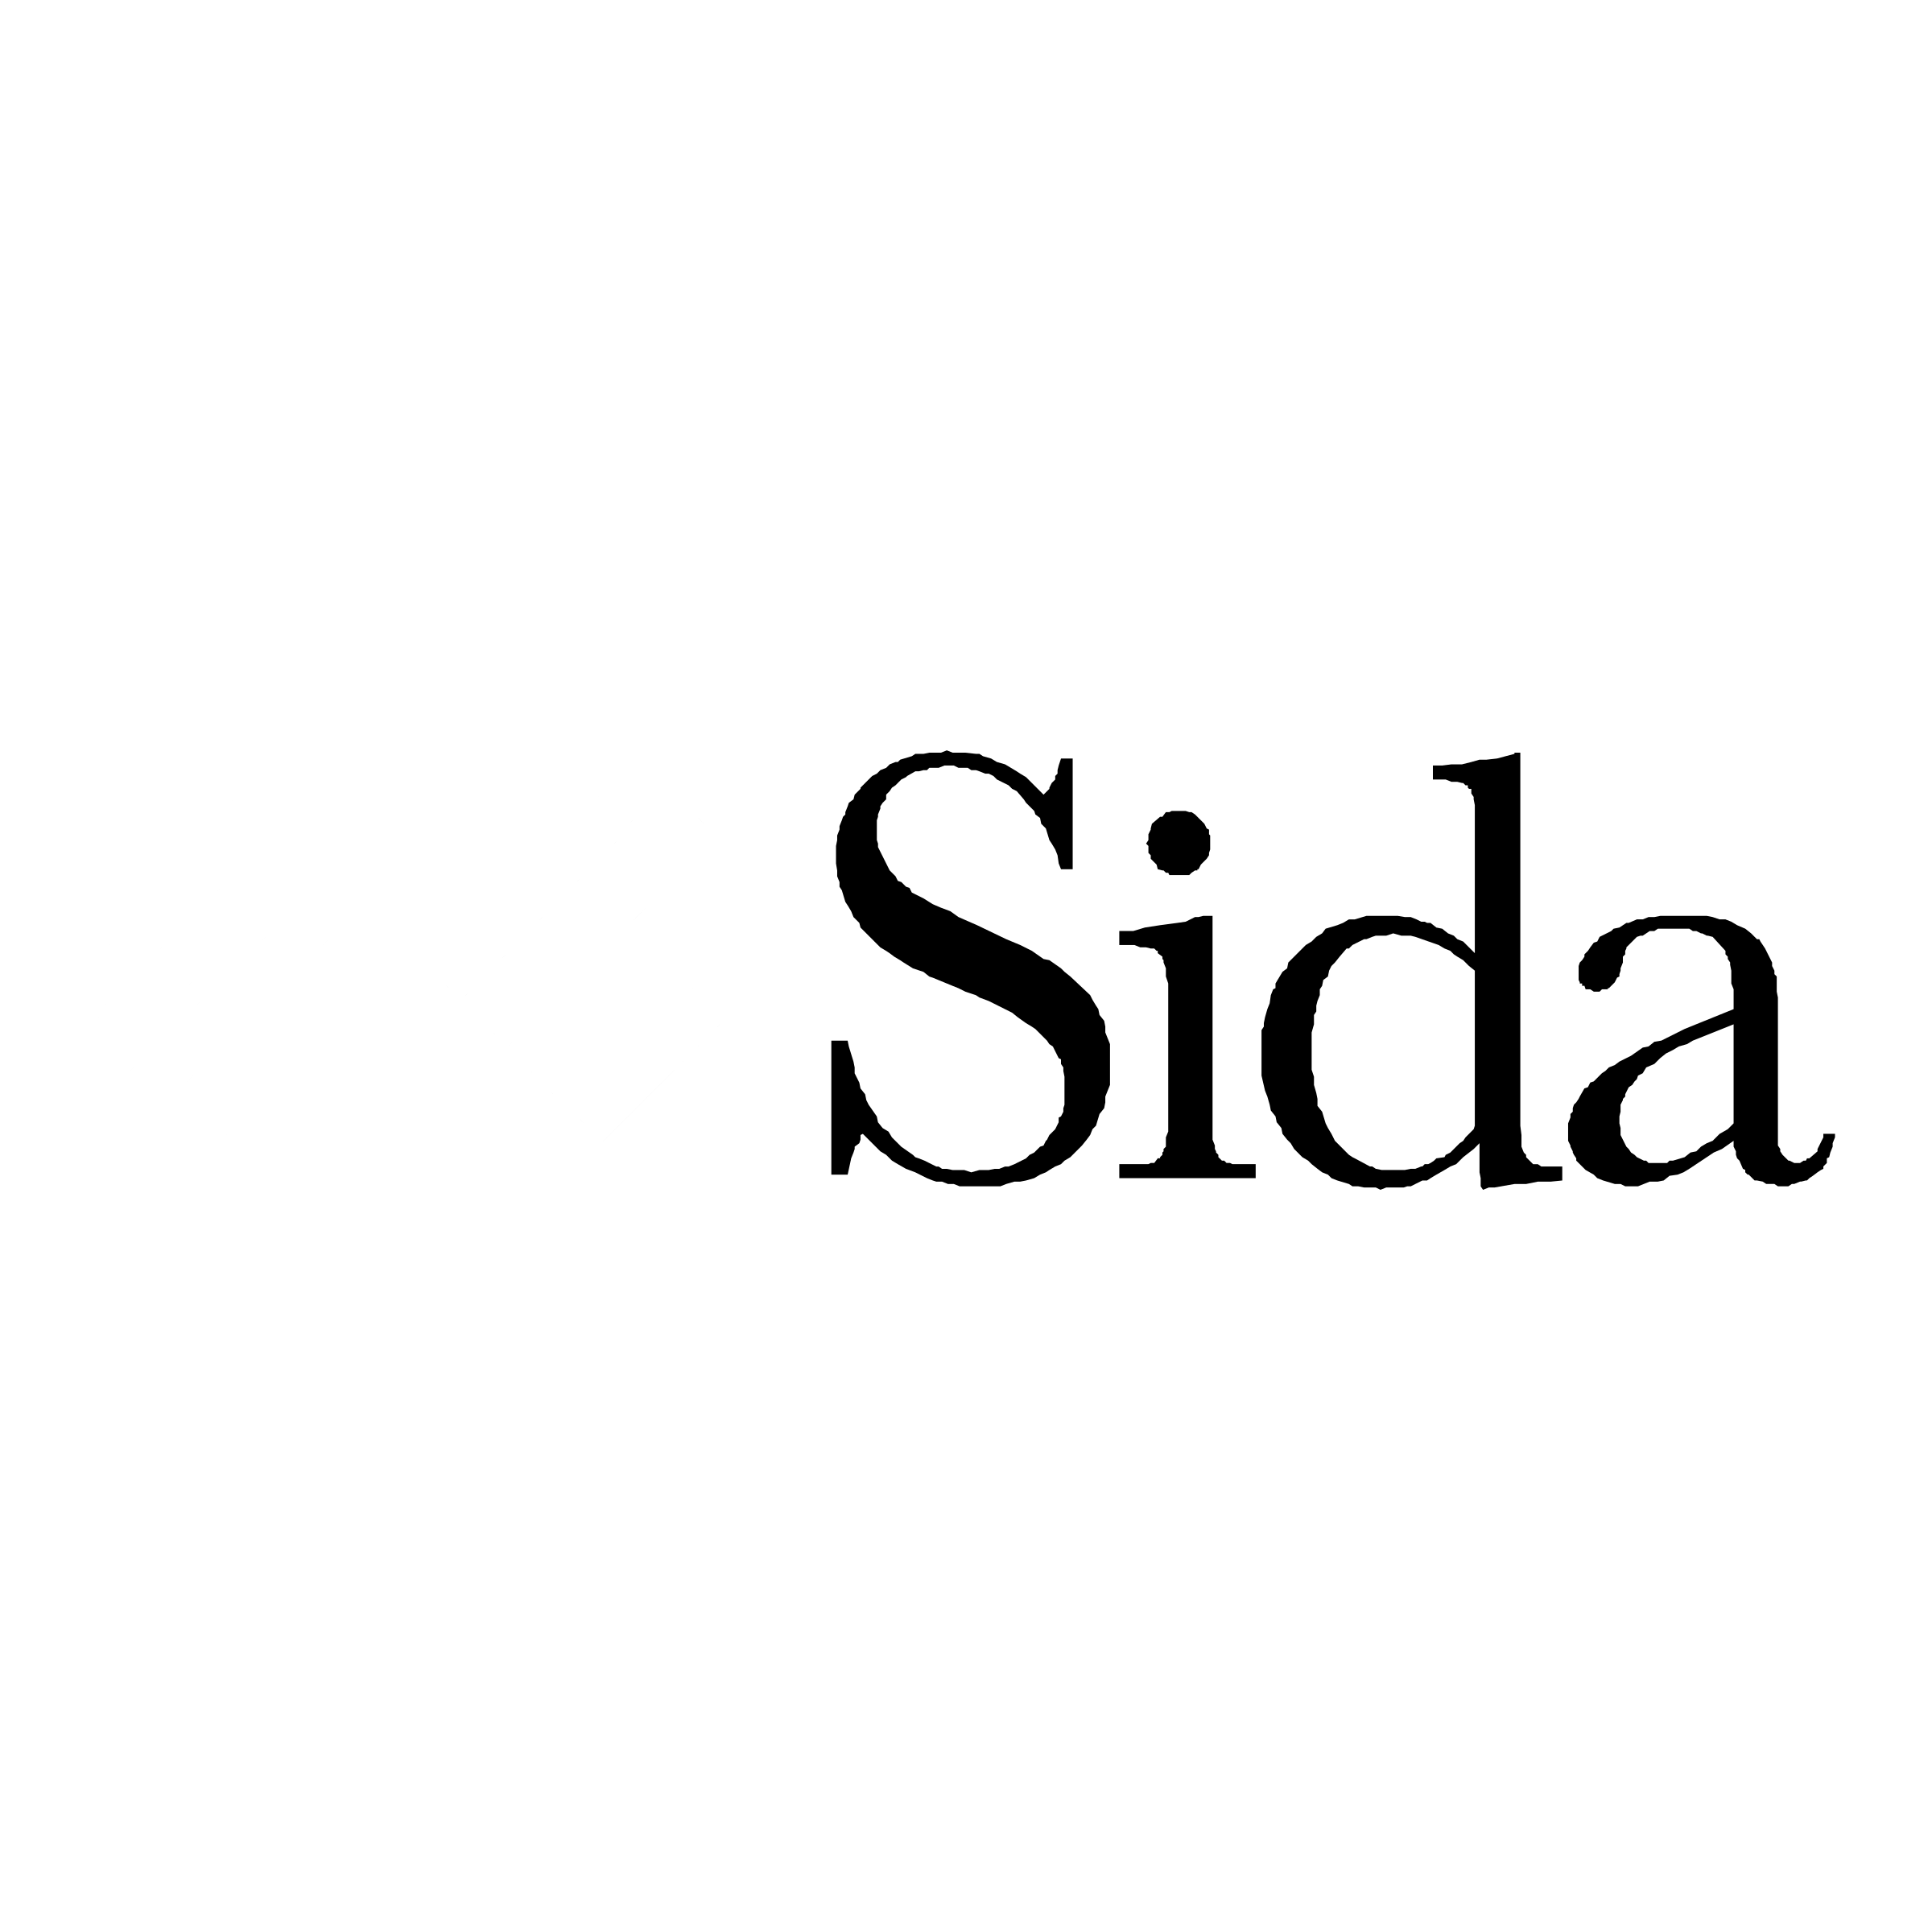 Sida Logo - Sida Logo PNG Transparent & SVG Vector - Freebie Supply